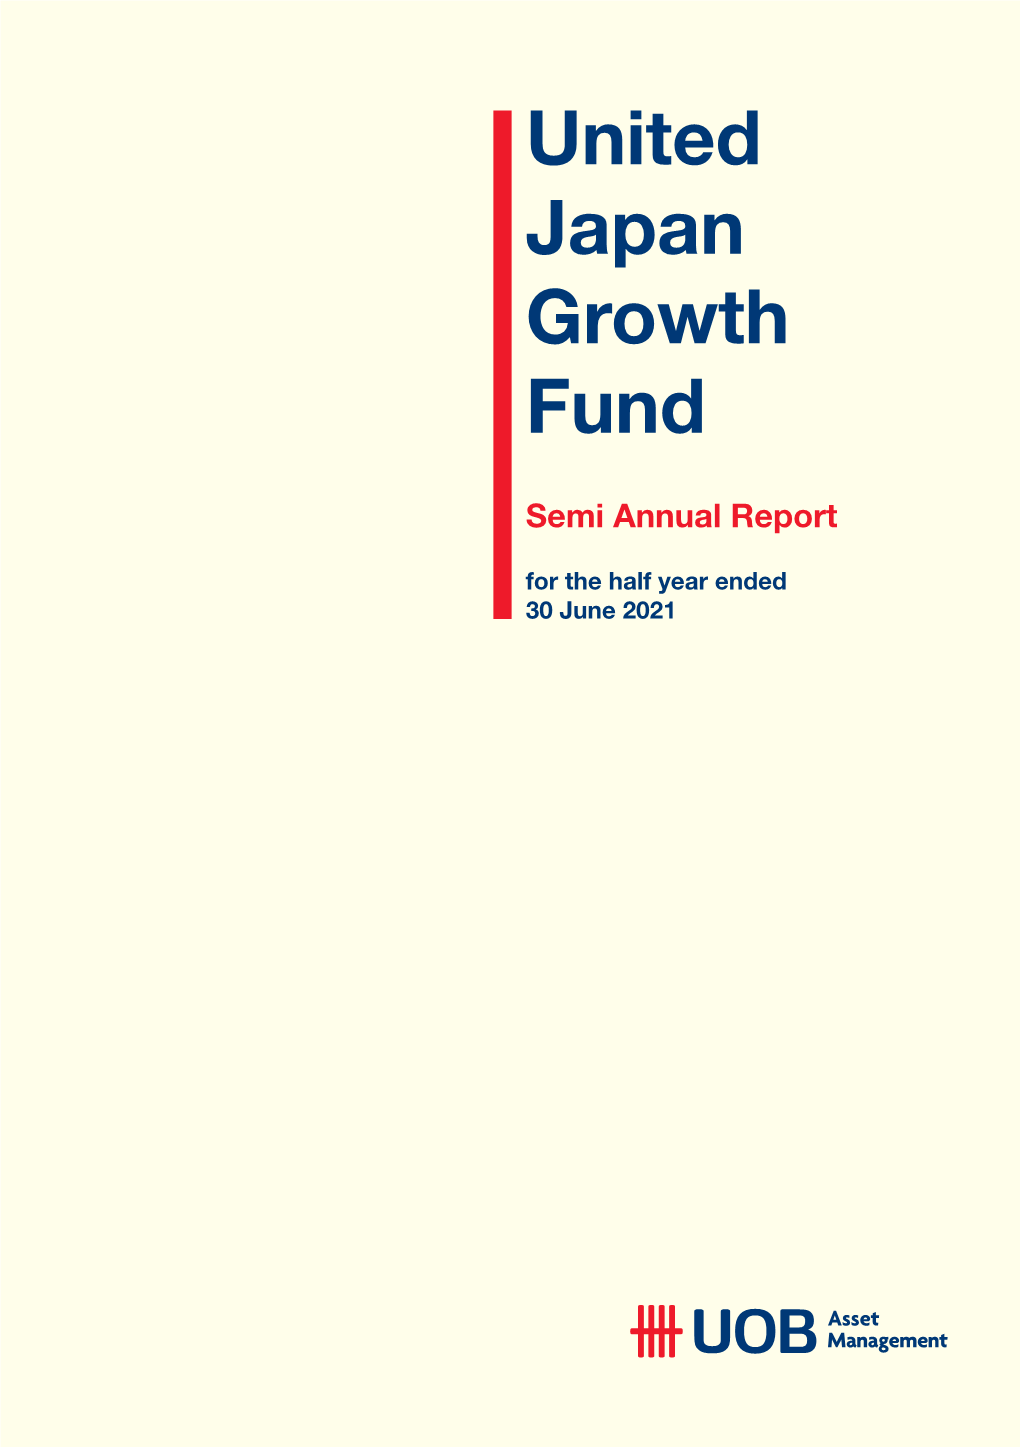 United Japan Growth Fund